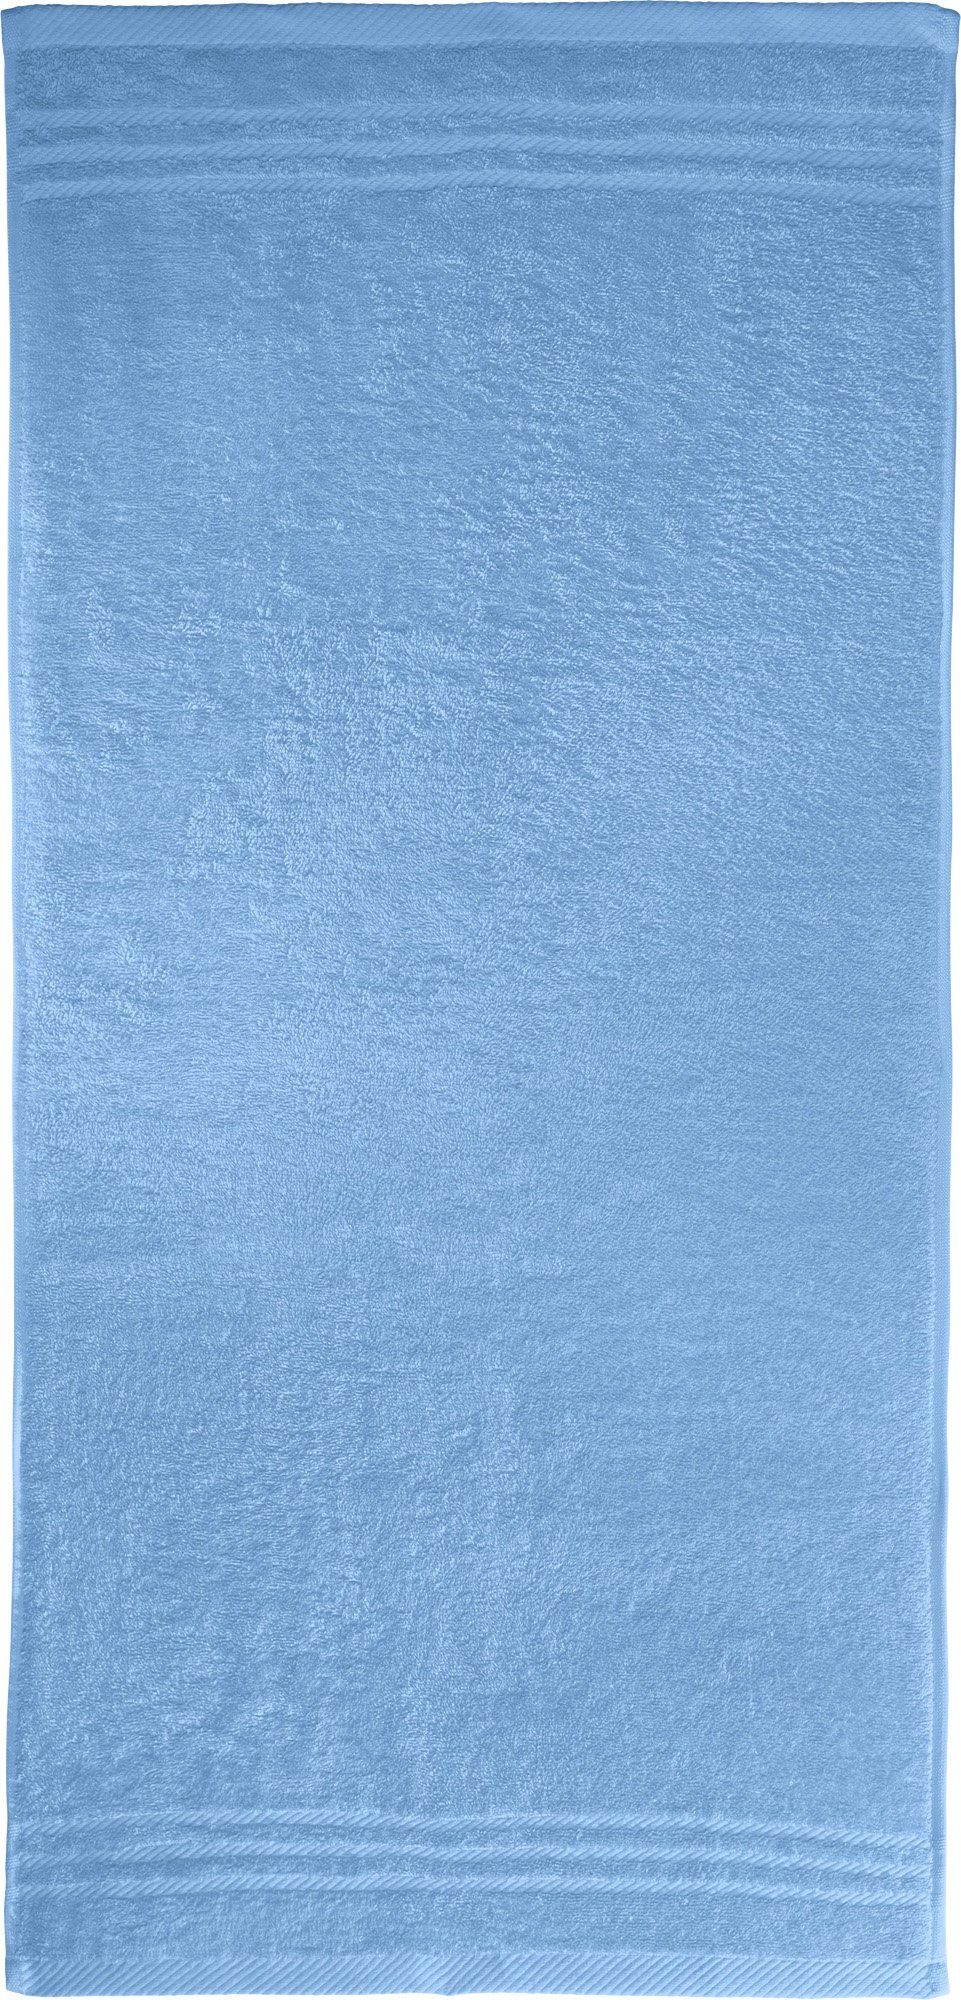 REDBEST Handtuch Handtuch, Frottier (1-St), Walk-Frottier Uni hellblau | Alle Handtücher